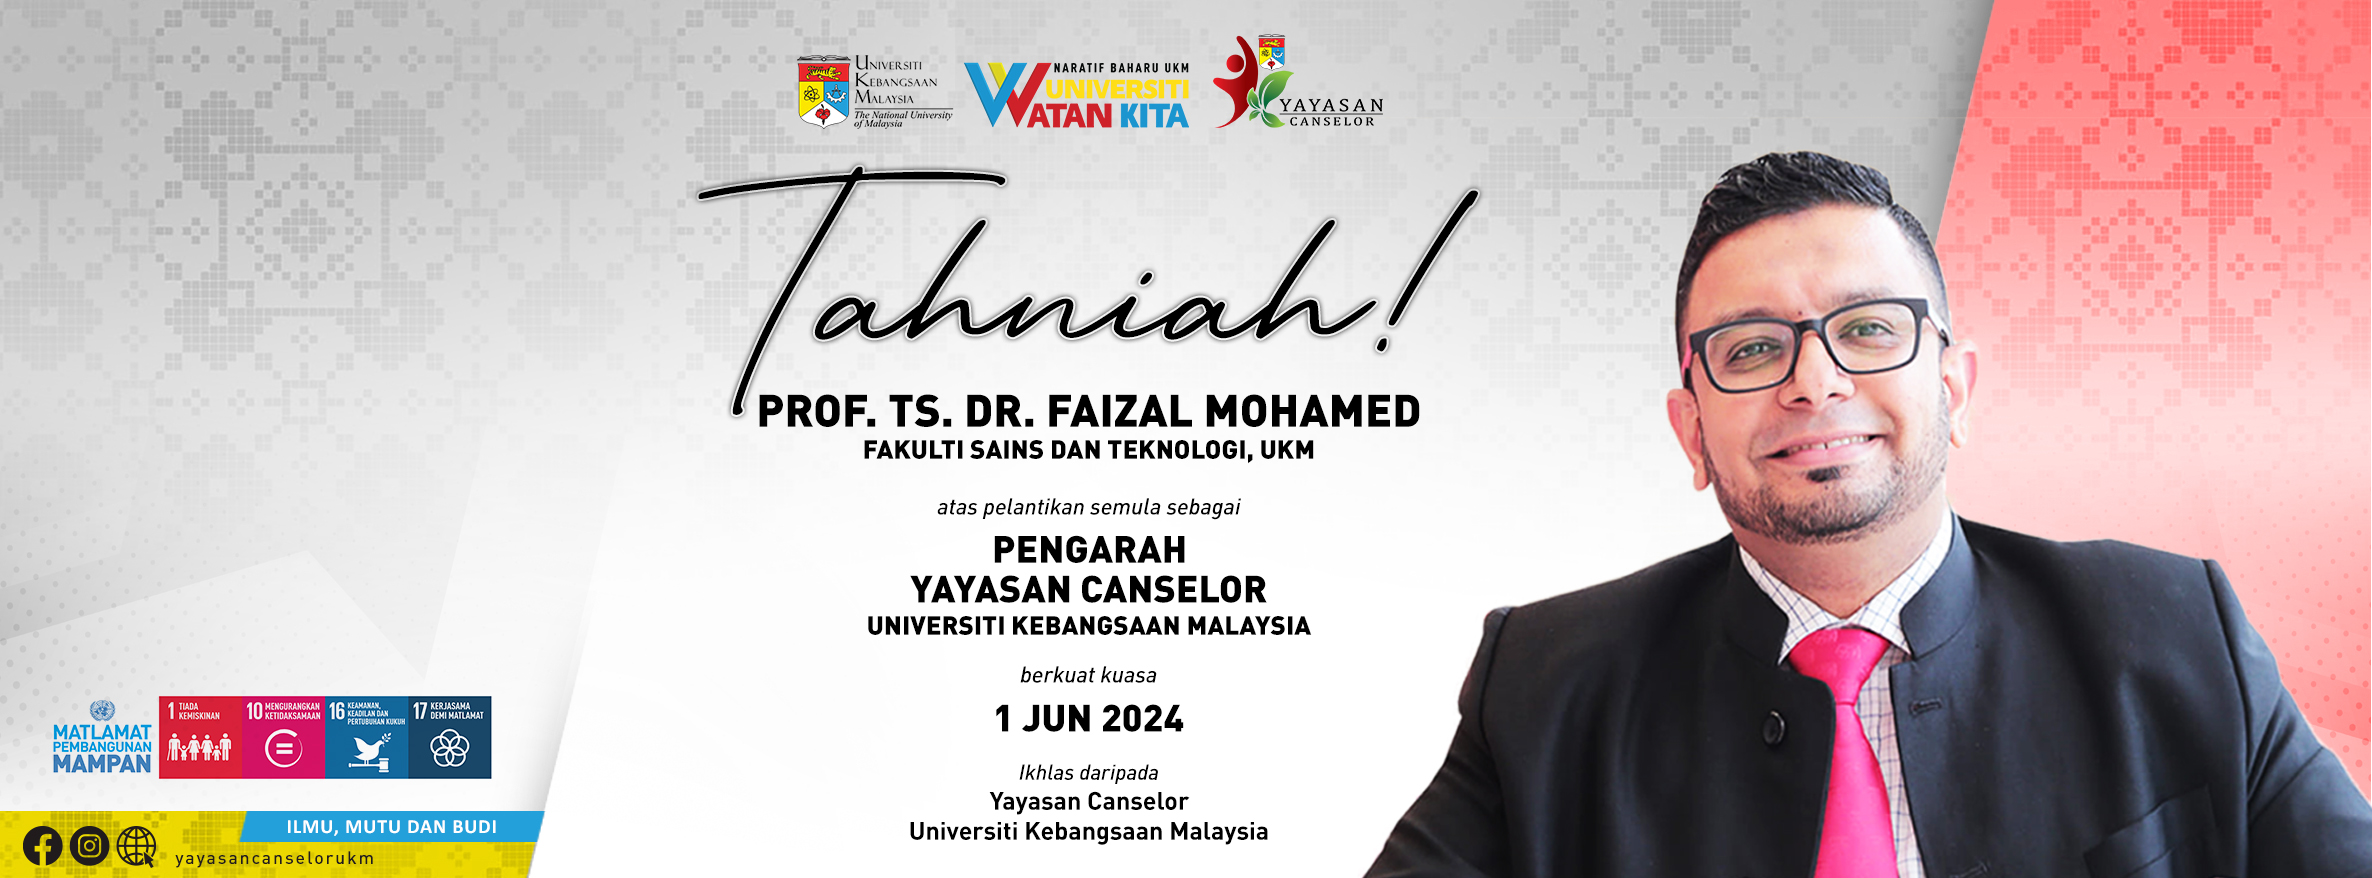 BANNER TAHNIAH-Prof. Ts. Dr. Faizal Mohamed